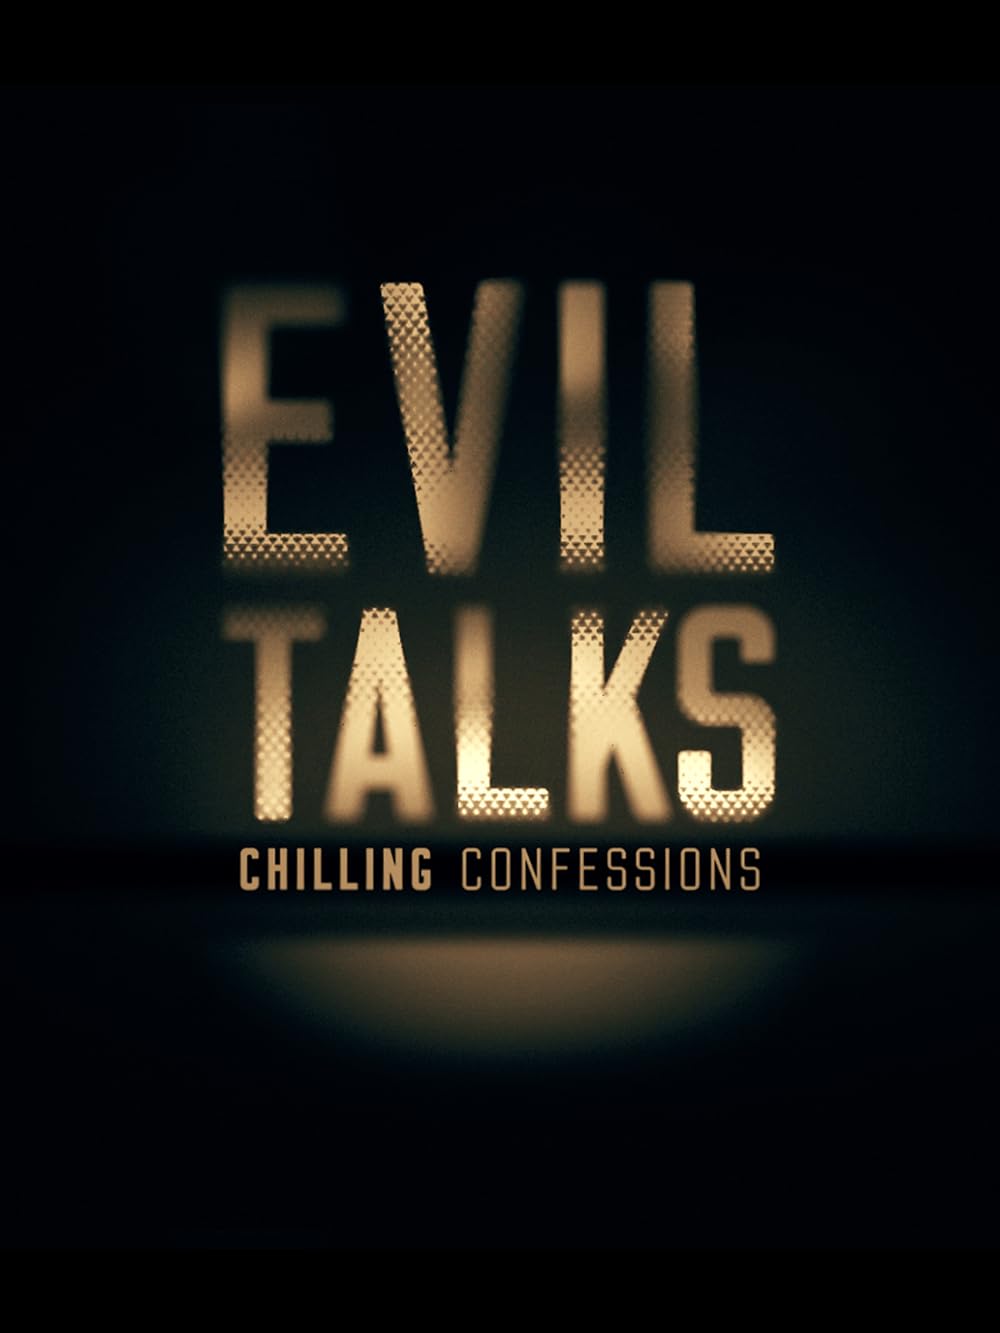 Evil Talks: Chilling Confessions